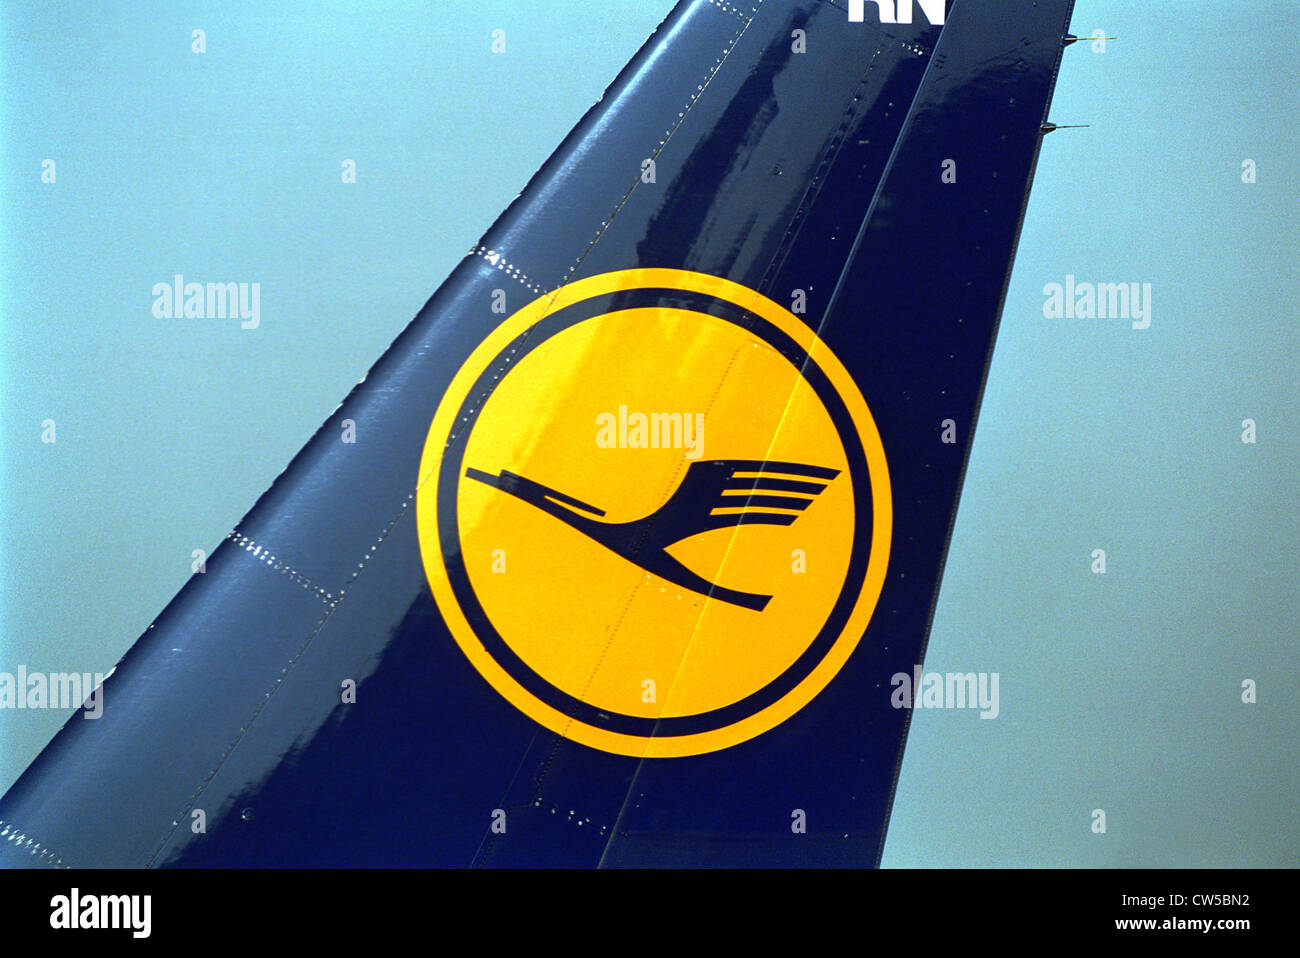 Fin of an aircraft with Lufthansa logo Stock Photo